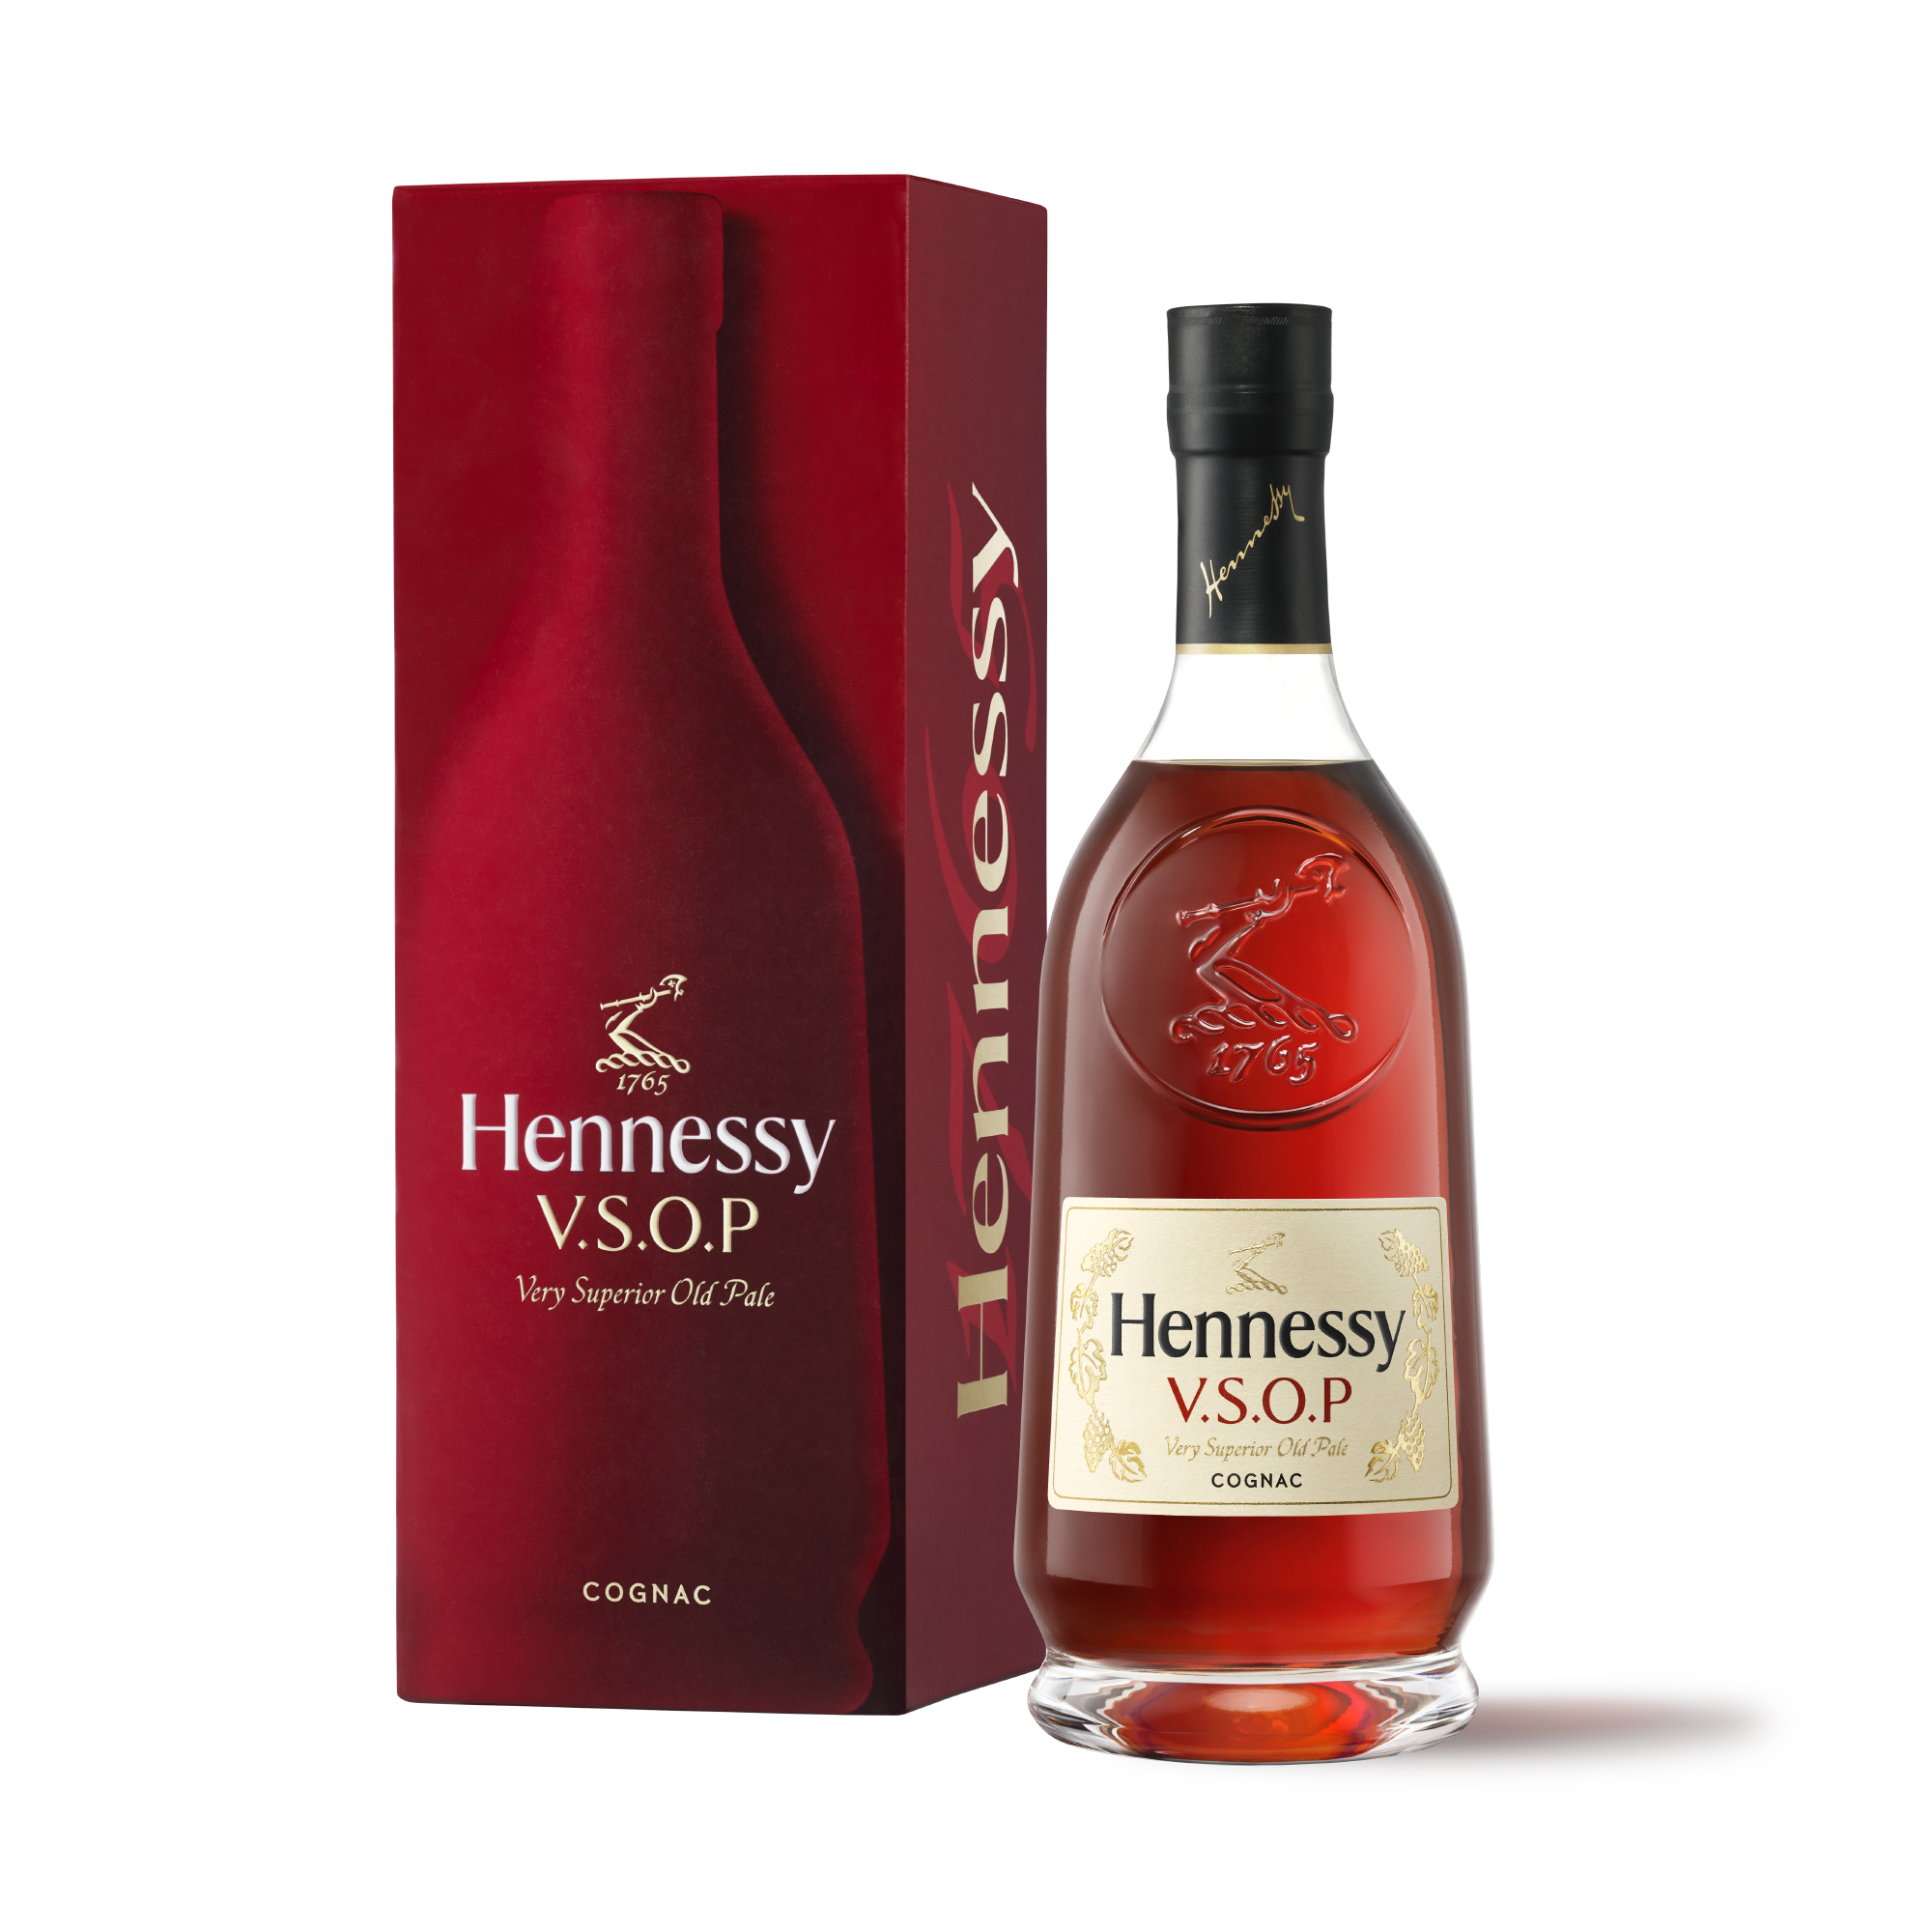 Hennessy V.S.O.P ขนาดลิตร ใหม่ล่าสุดกล่องแดงสุดหรู พร้อมส่งทันที!